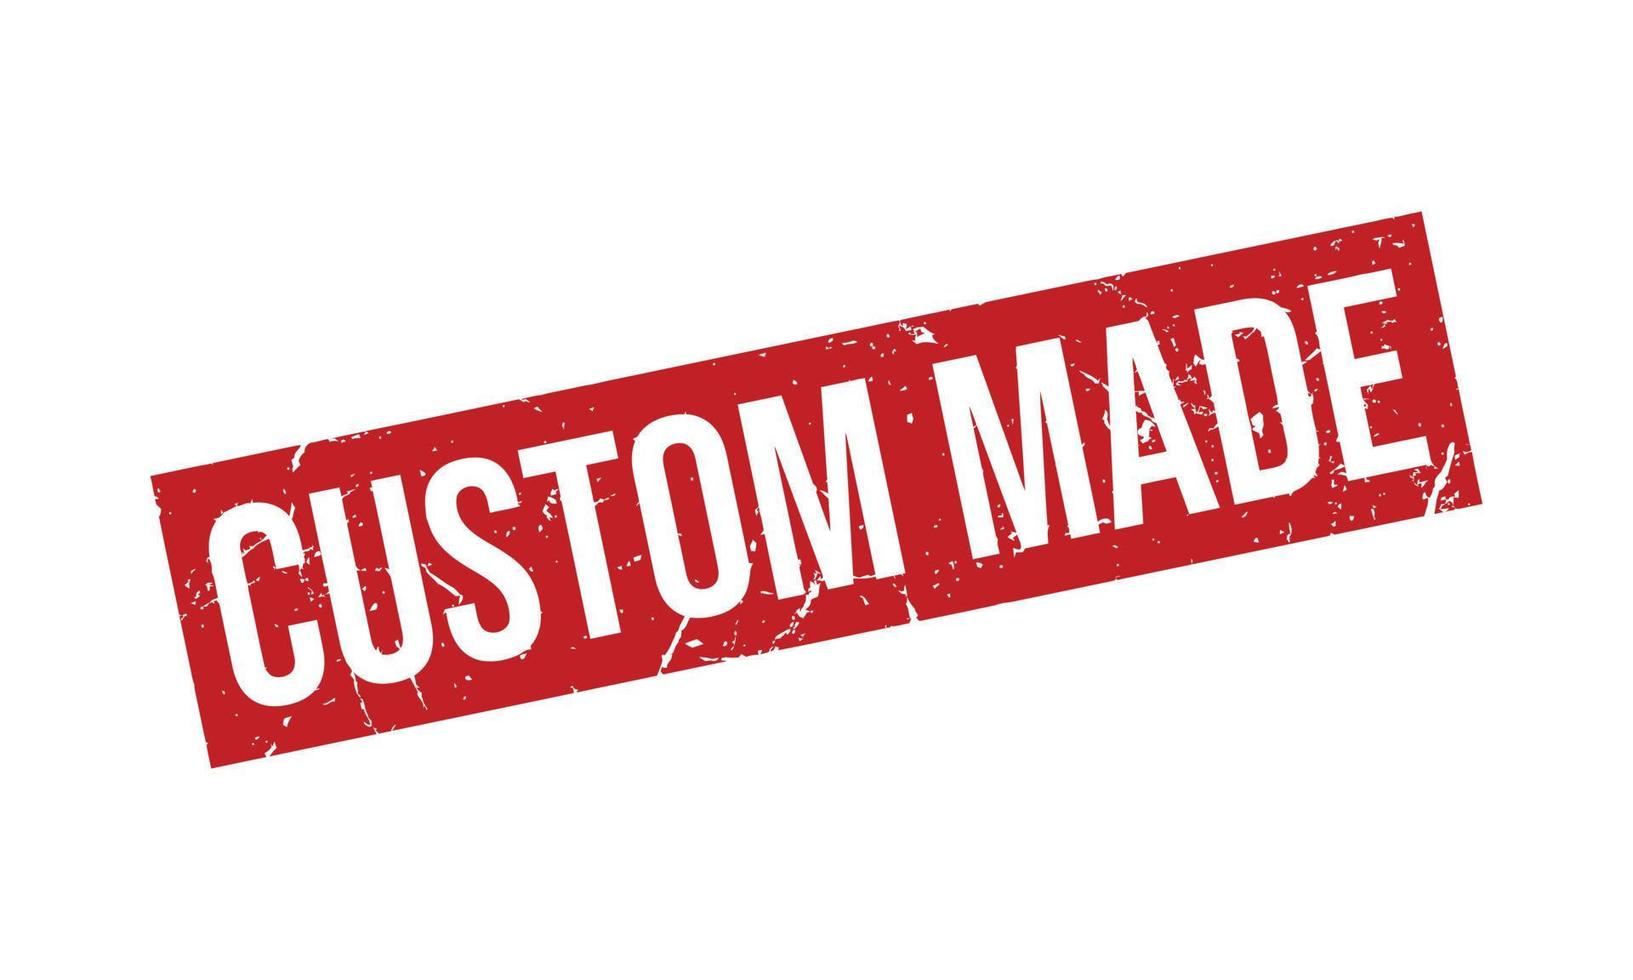 Custom Made Rubber Stamp. Custom Made Grunge Stamp Seal Vector Illustration